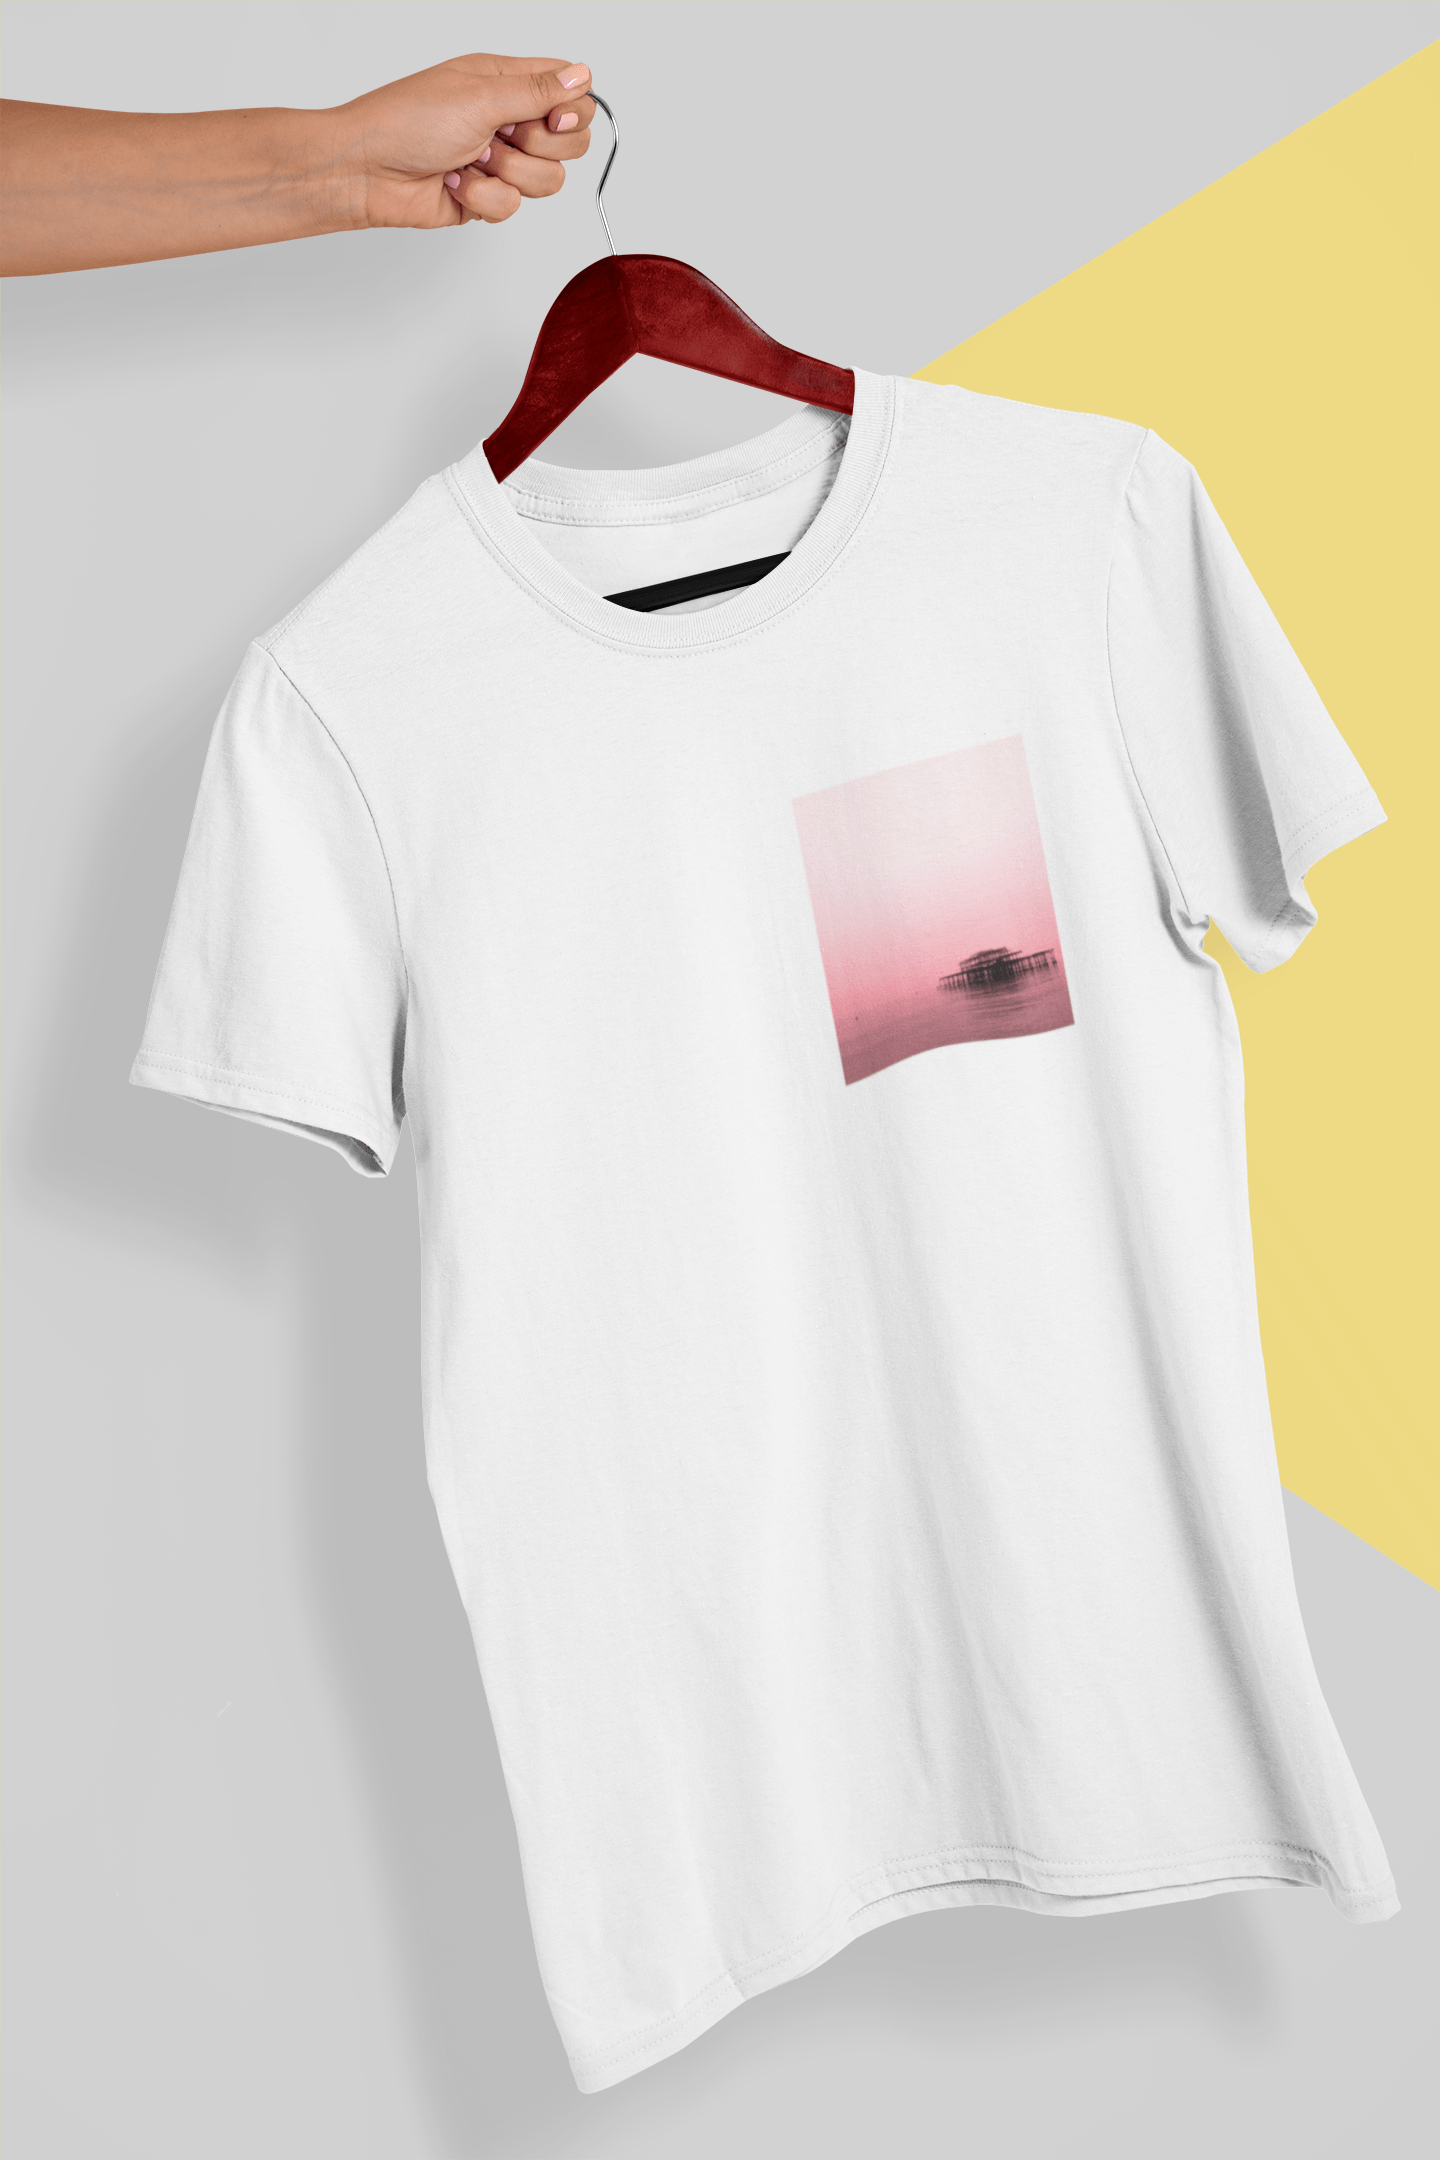 Red Pier - Organic Cotton T-Shirt - Pixel Gallery